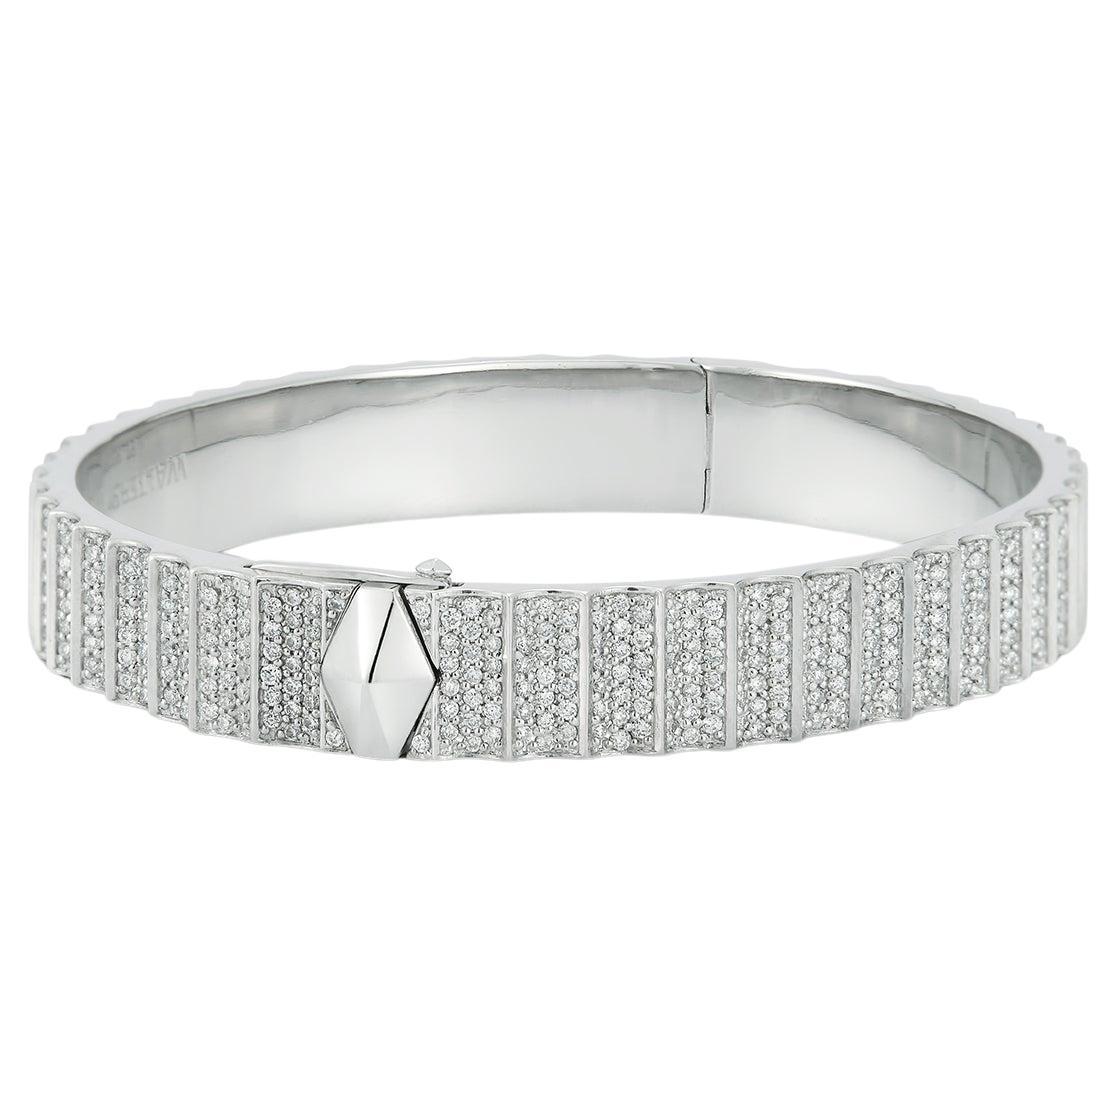 Walters Faith's Clive Collection Platinum All Diamond Fluted Bangle Bracelet. 3.15 Diamond Carat Weight. Bracelet size fits a 6